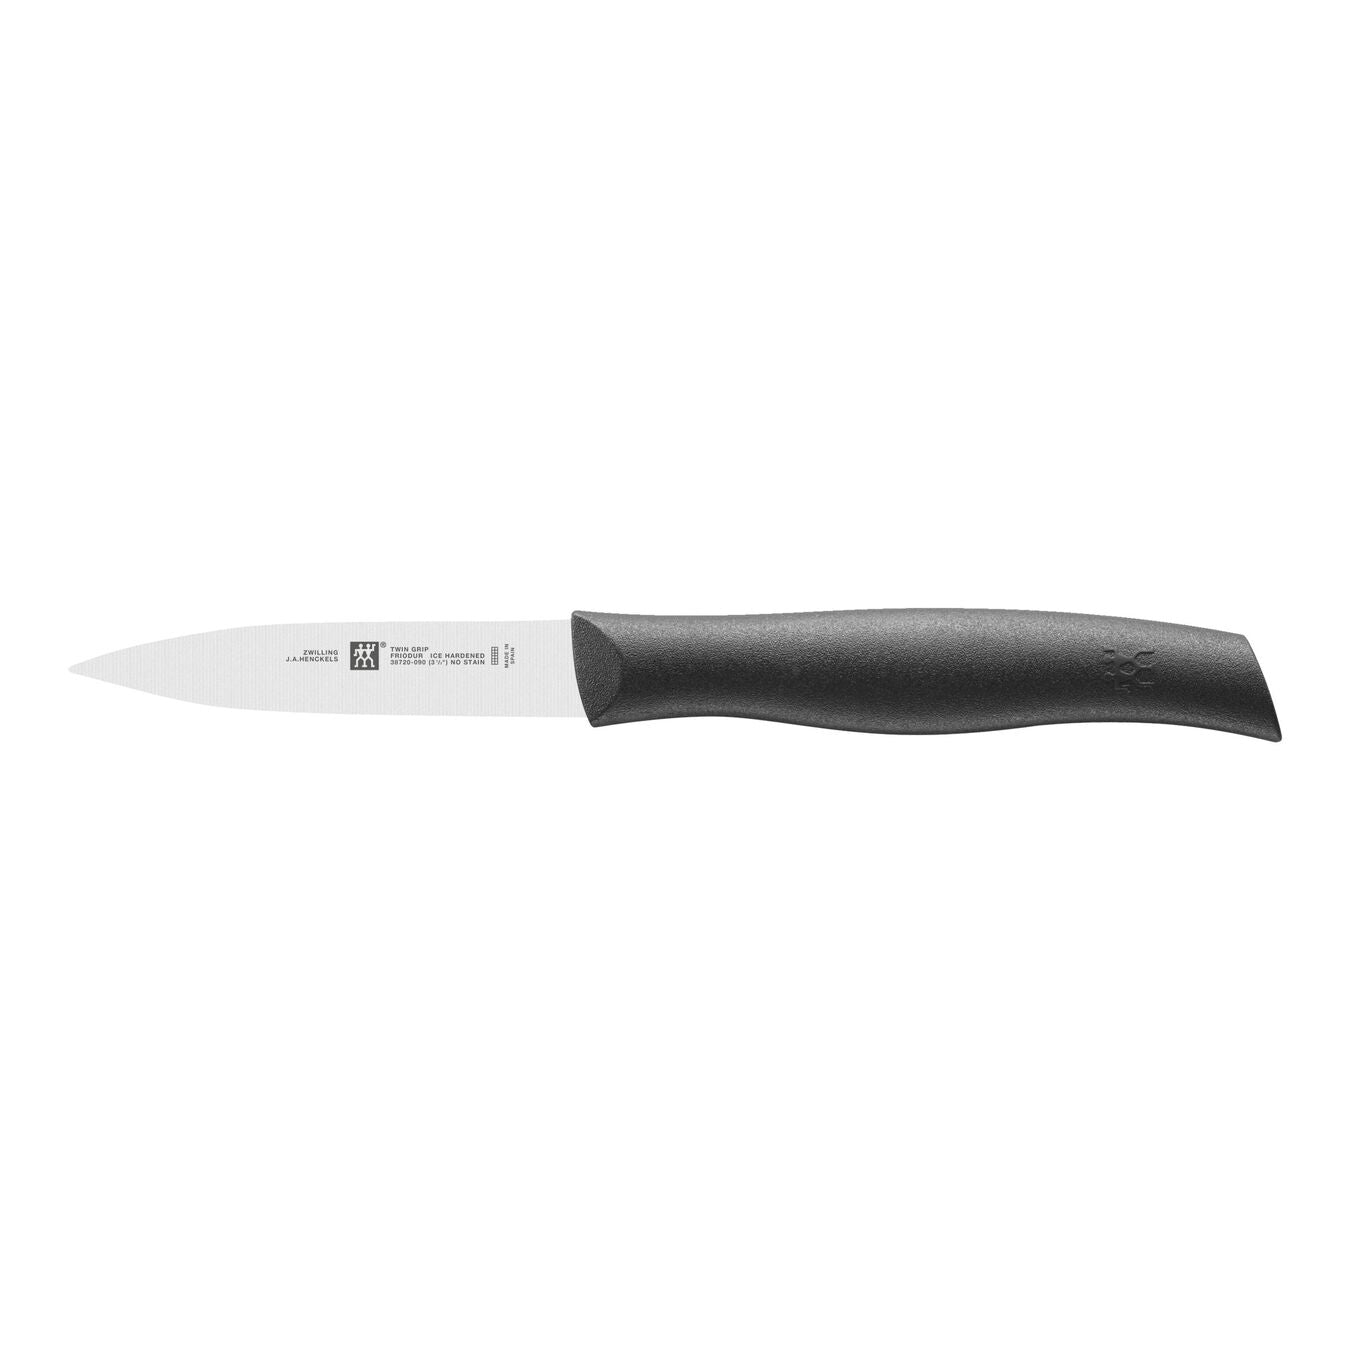 black handled knife on white background